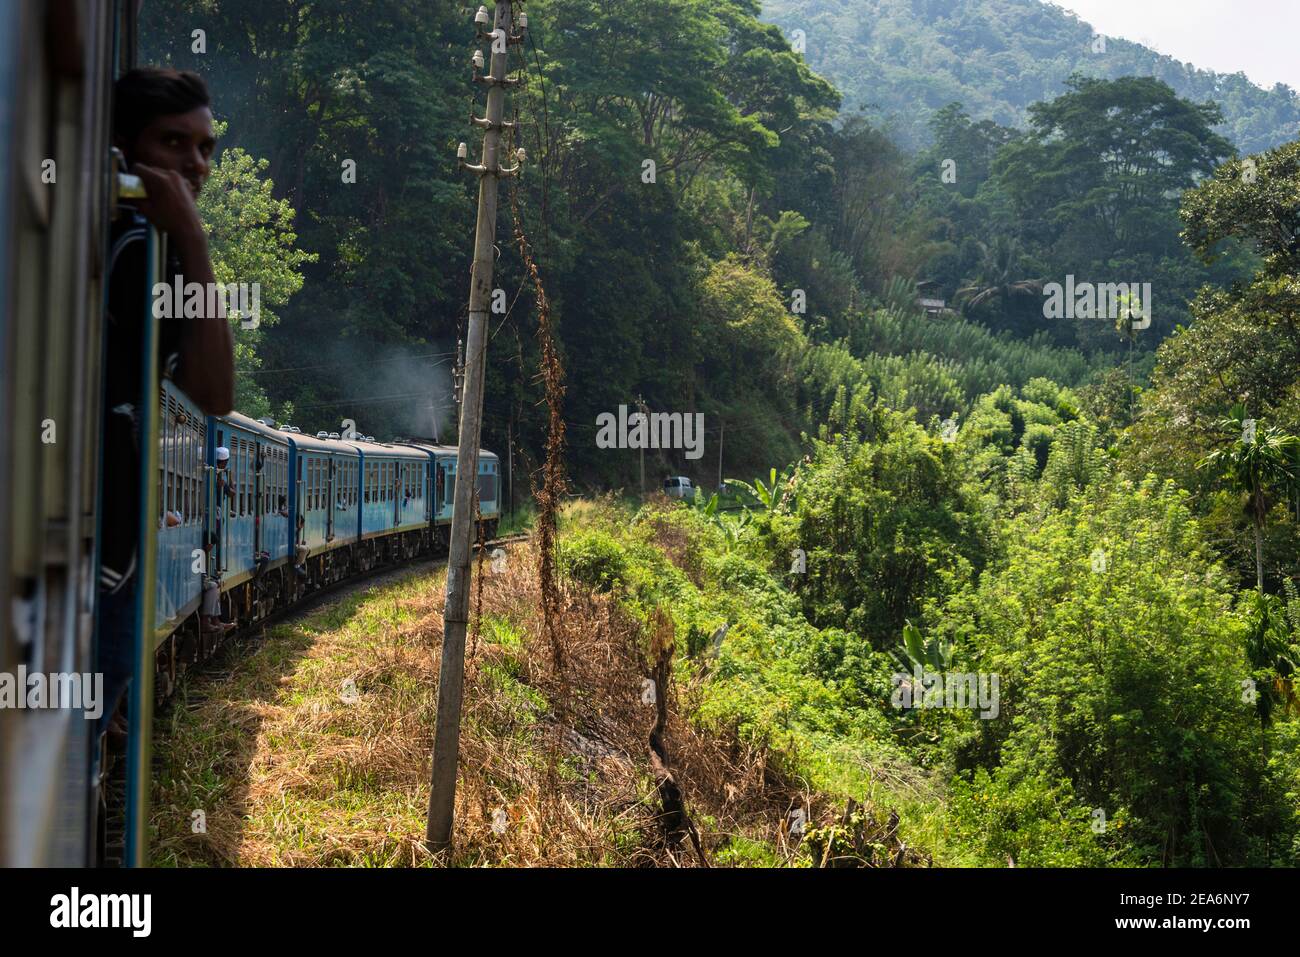 Blue Train of the Sri Lanka Railway, Scenic train journey through lush green forest in the hills Stock Photo